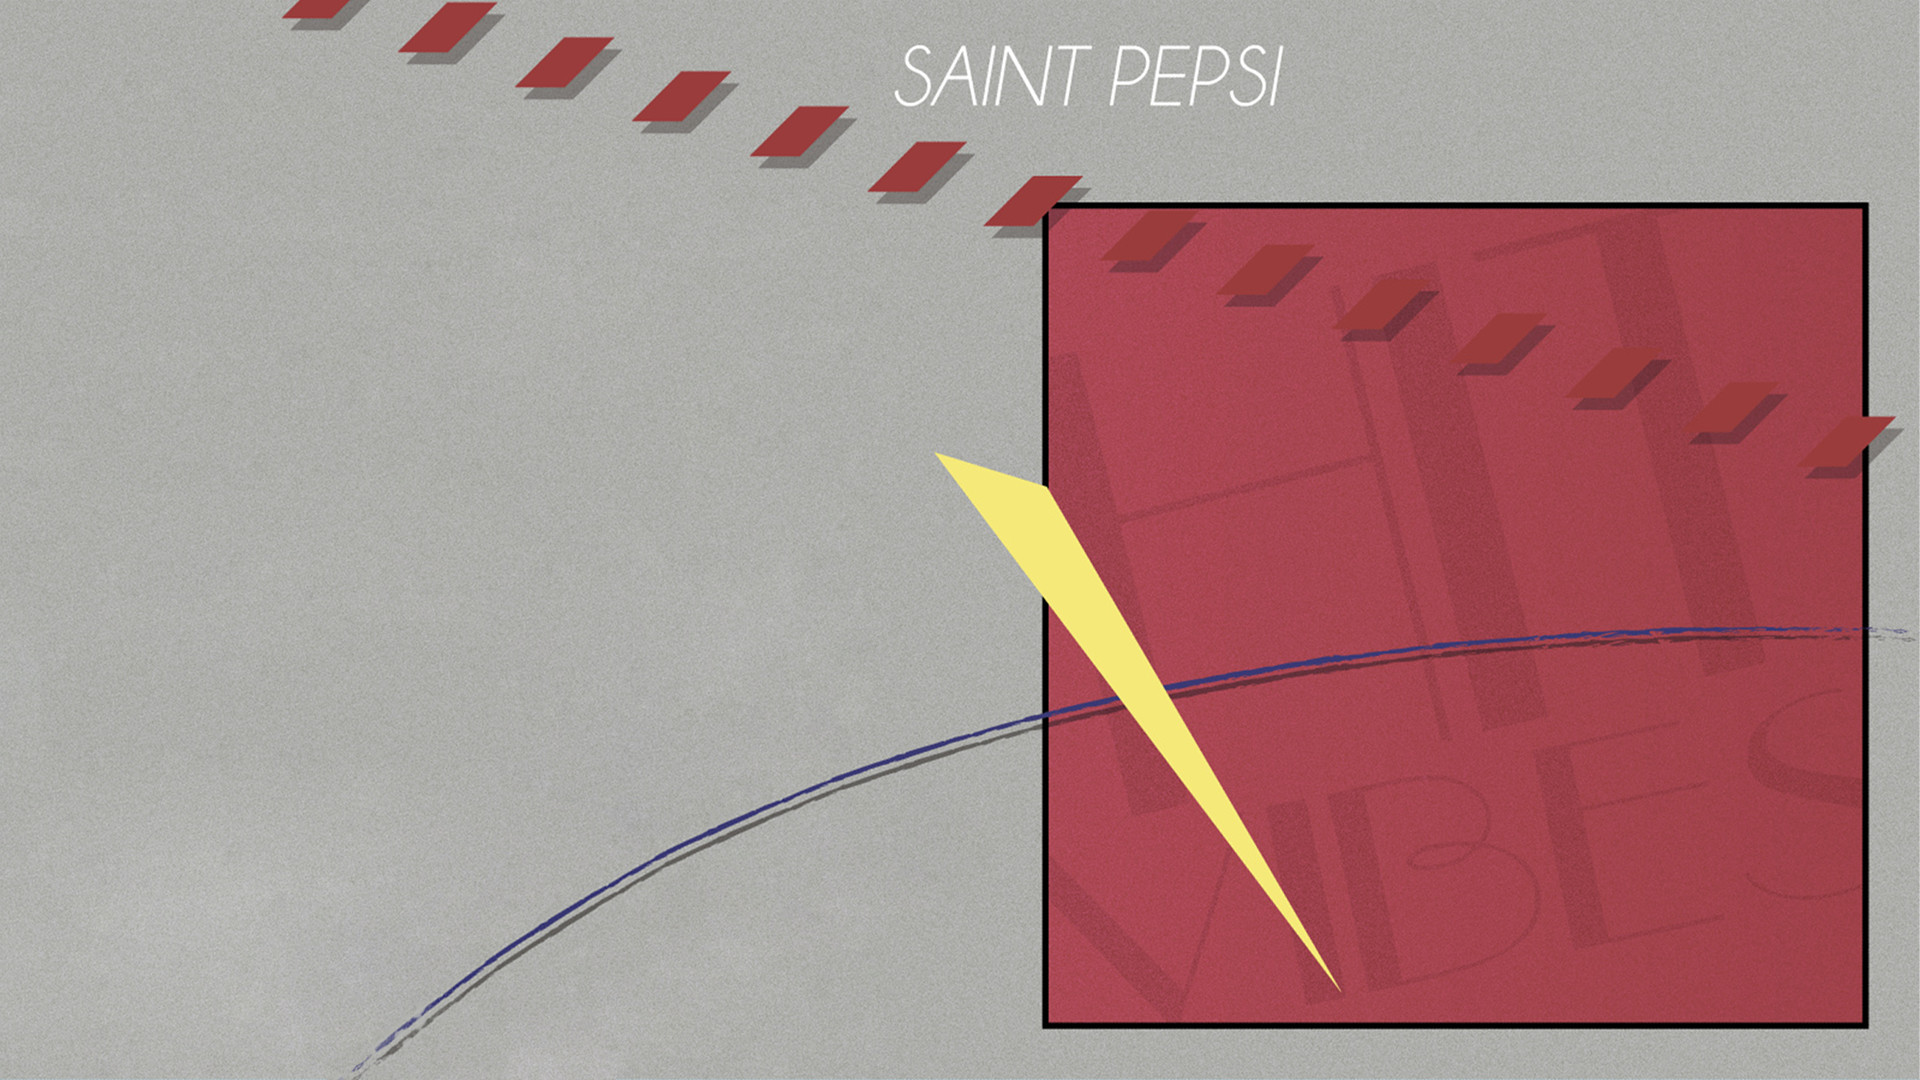 1920x1080 I made a wallpaper of Saint Pepsi's Hit Vibes. Enjoy!